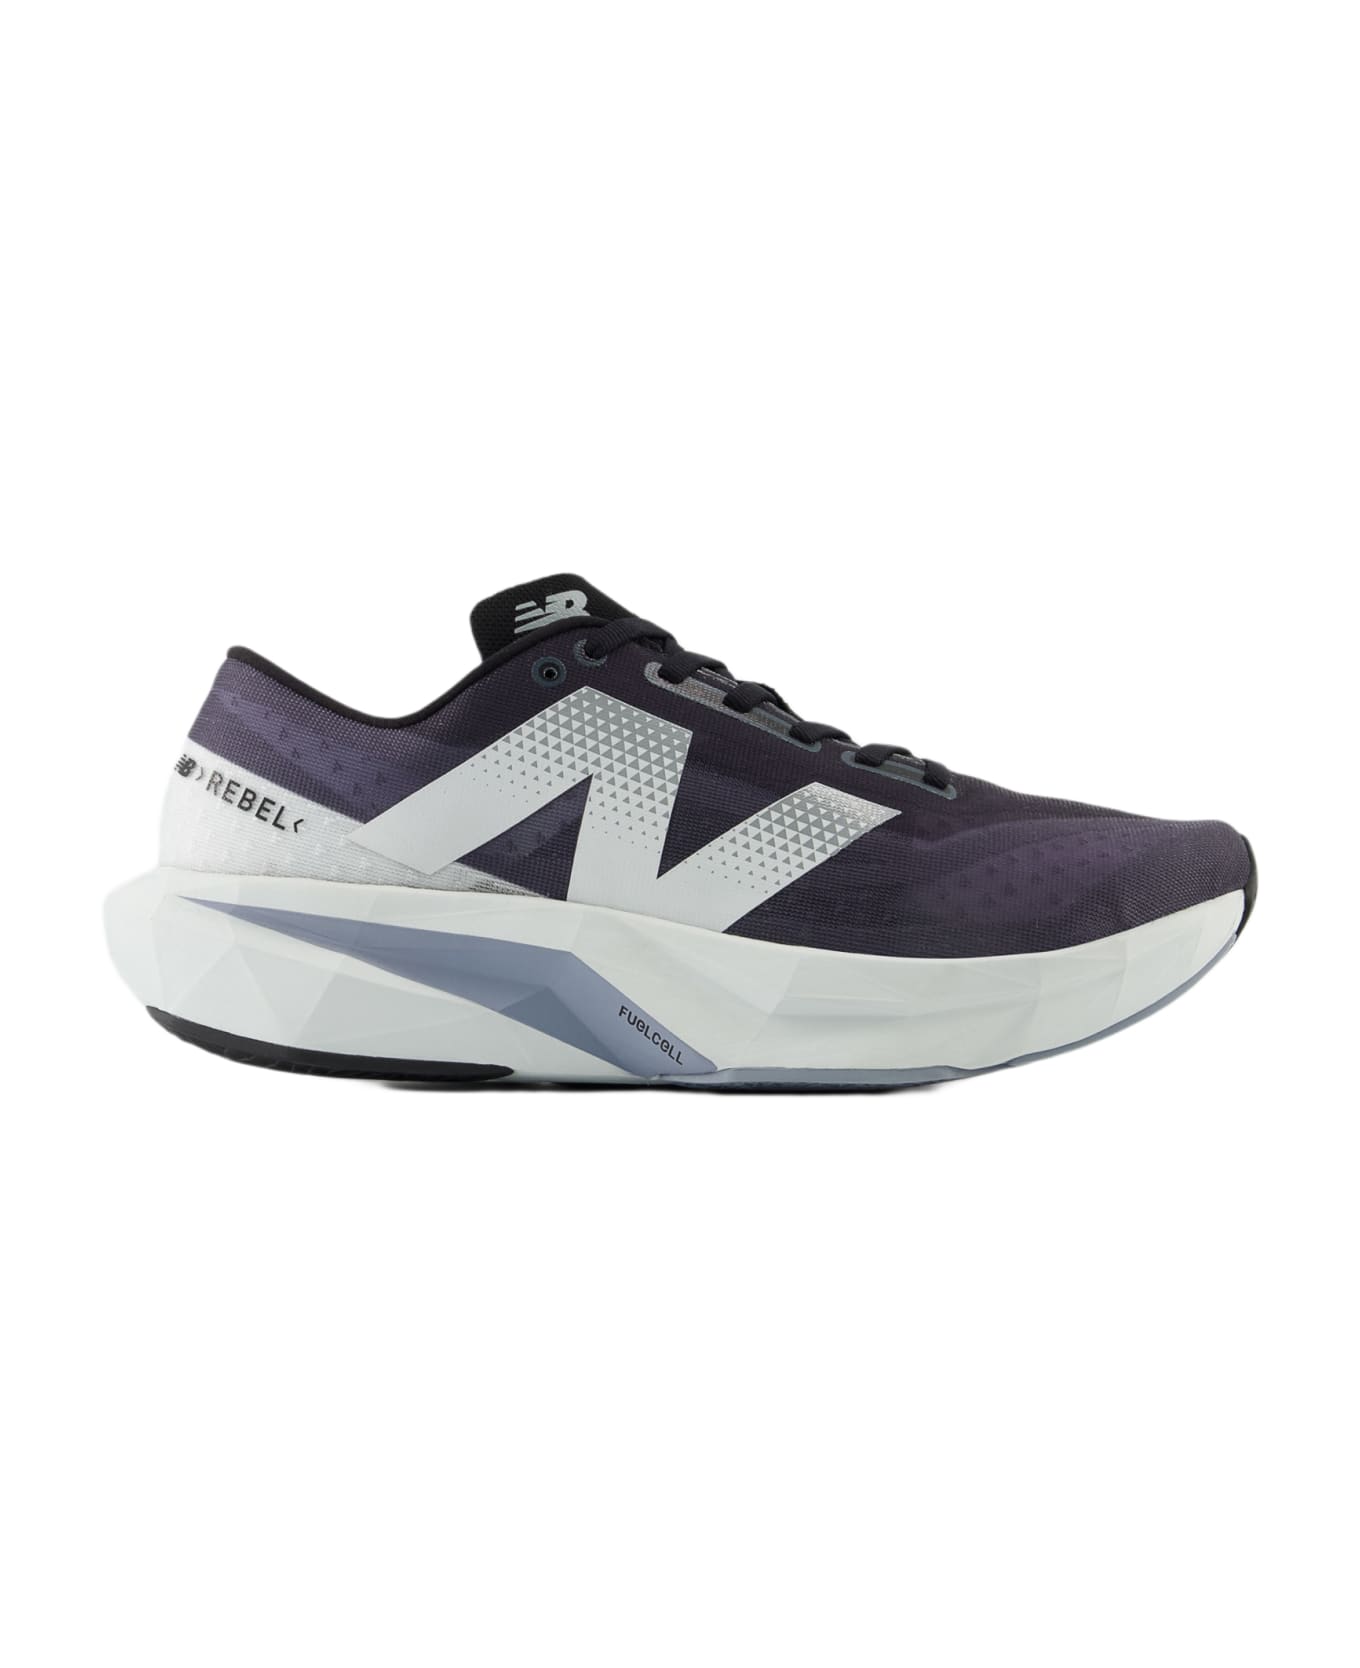 New Balance Rebel V4 Sneakers - Grey